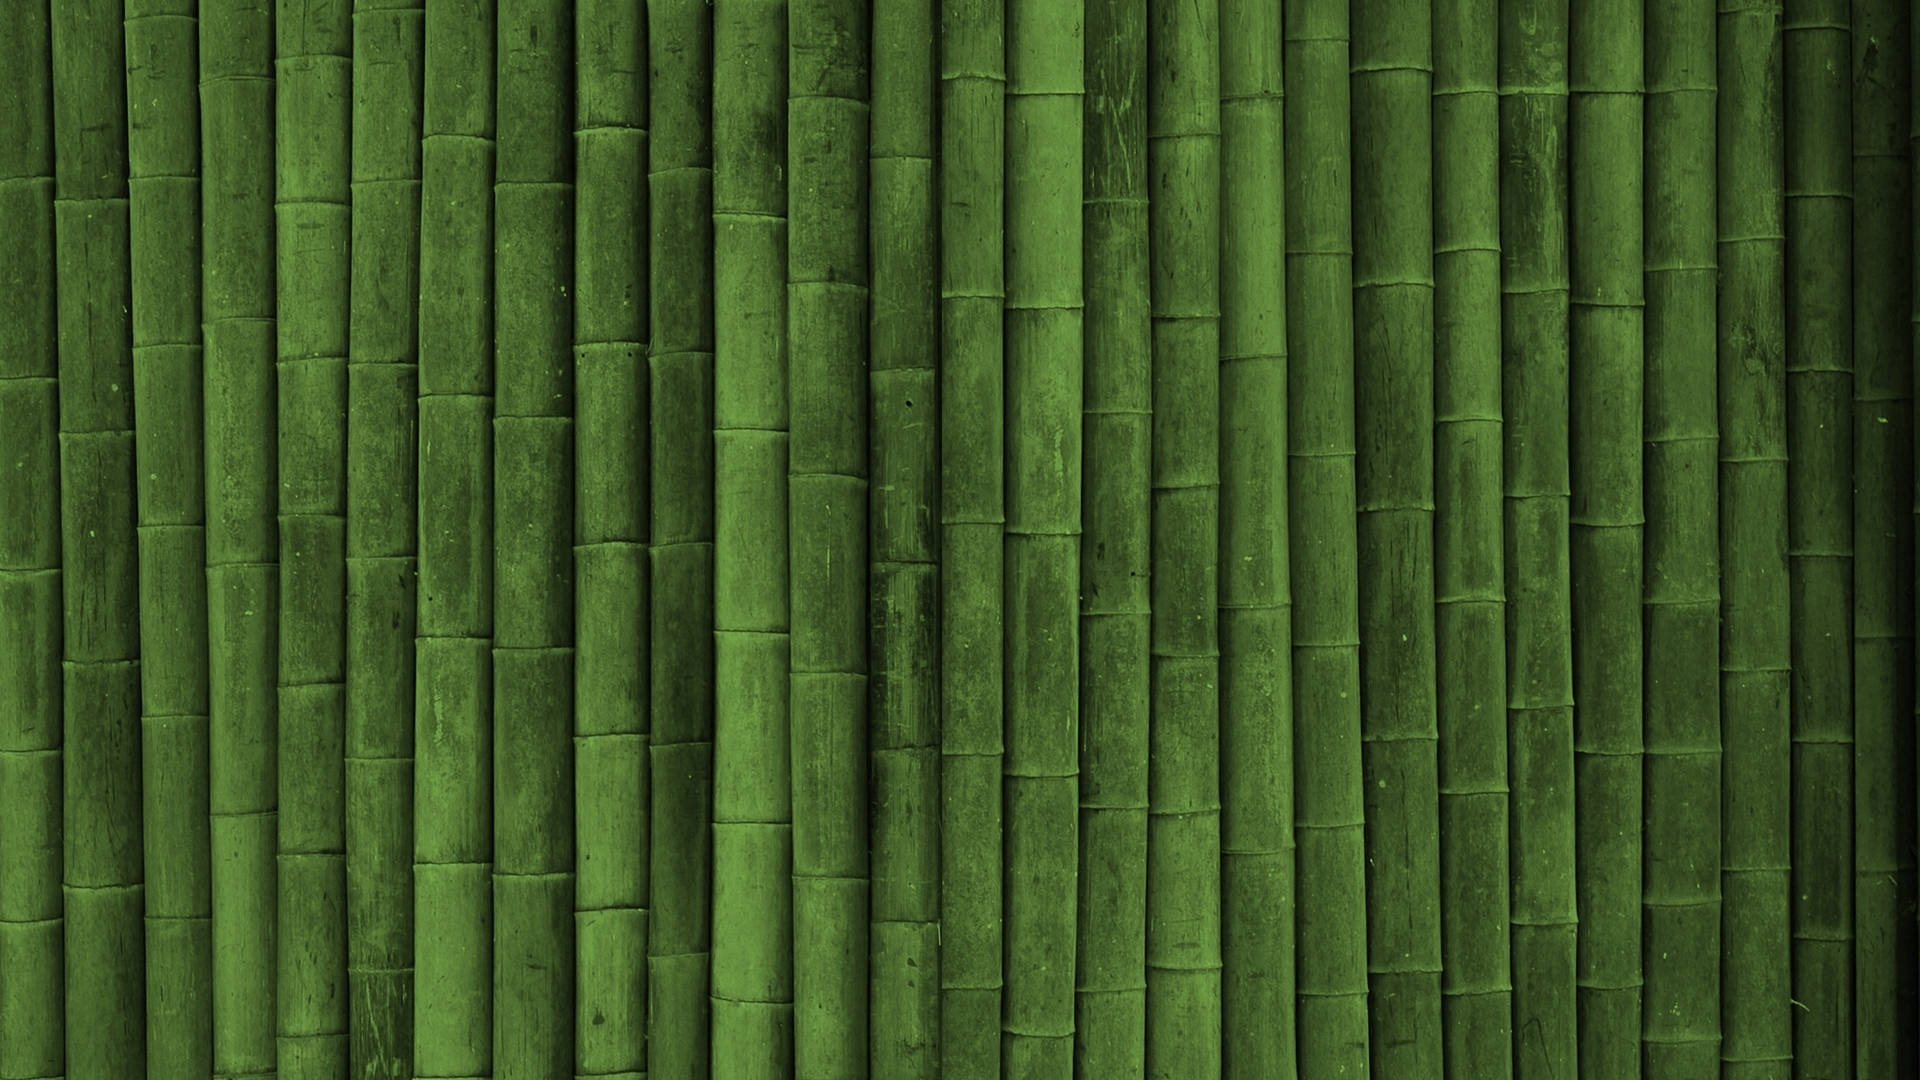 Minimalist Bamboo Hd